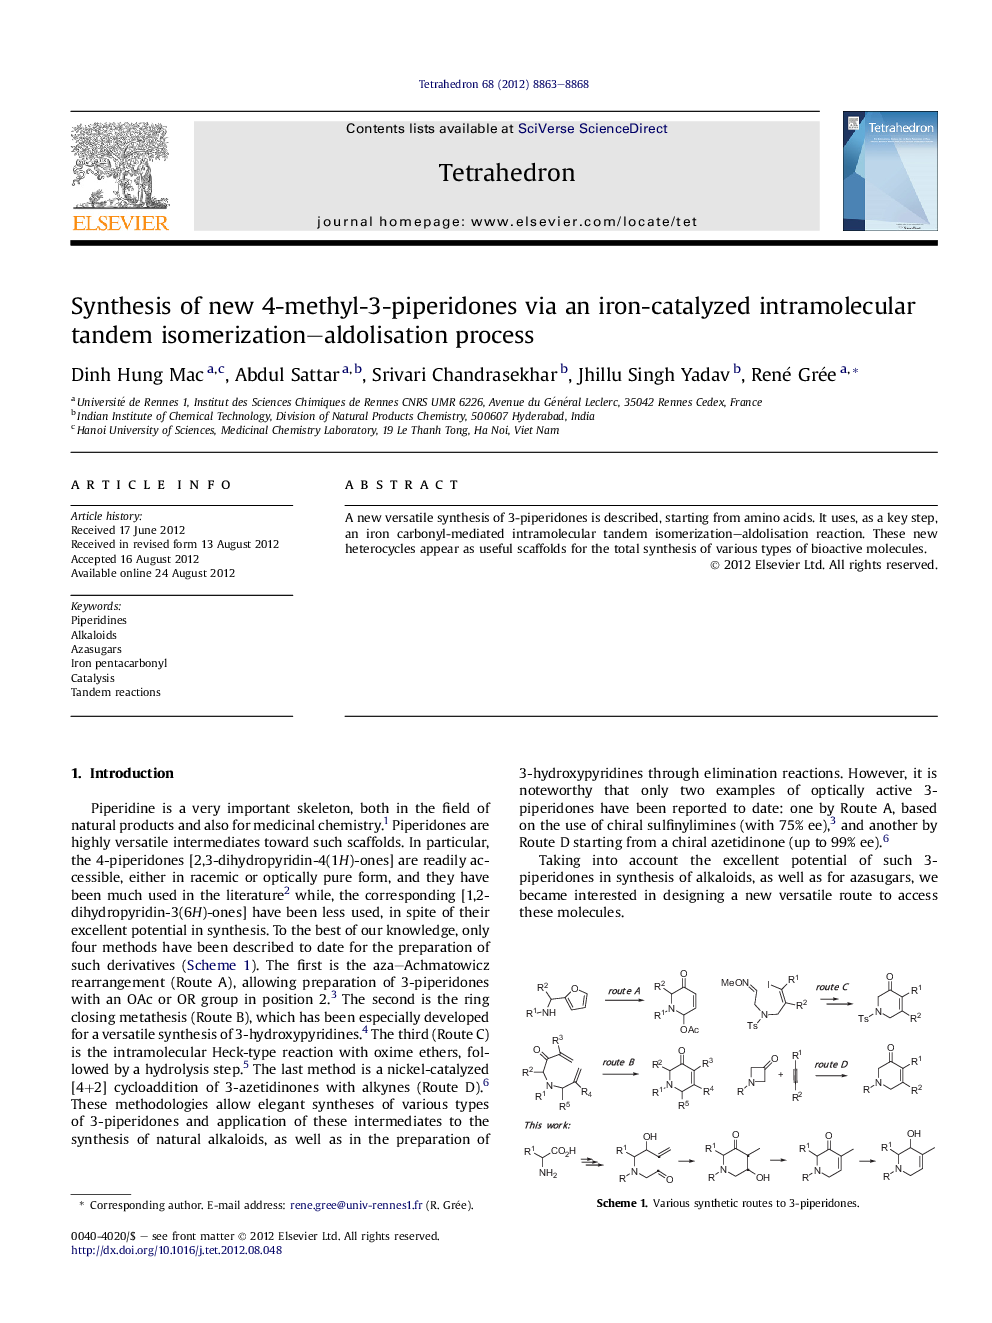 Synthesis of new 4-methyl-3-piperidones via an iron-catalyzed intramolecular tandem isomerization-aldolisation process